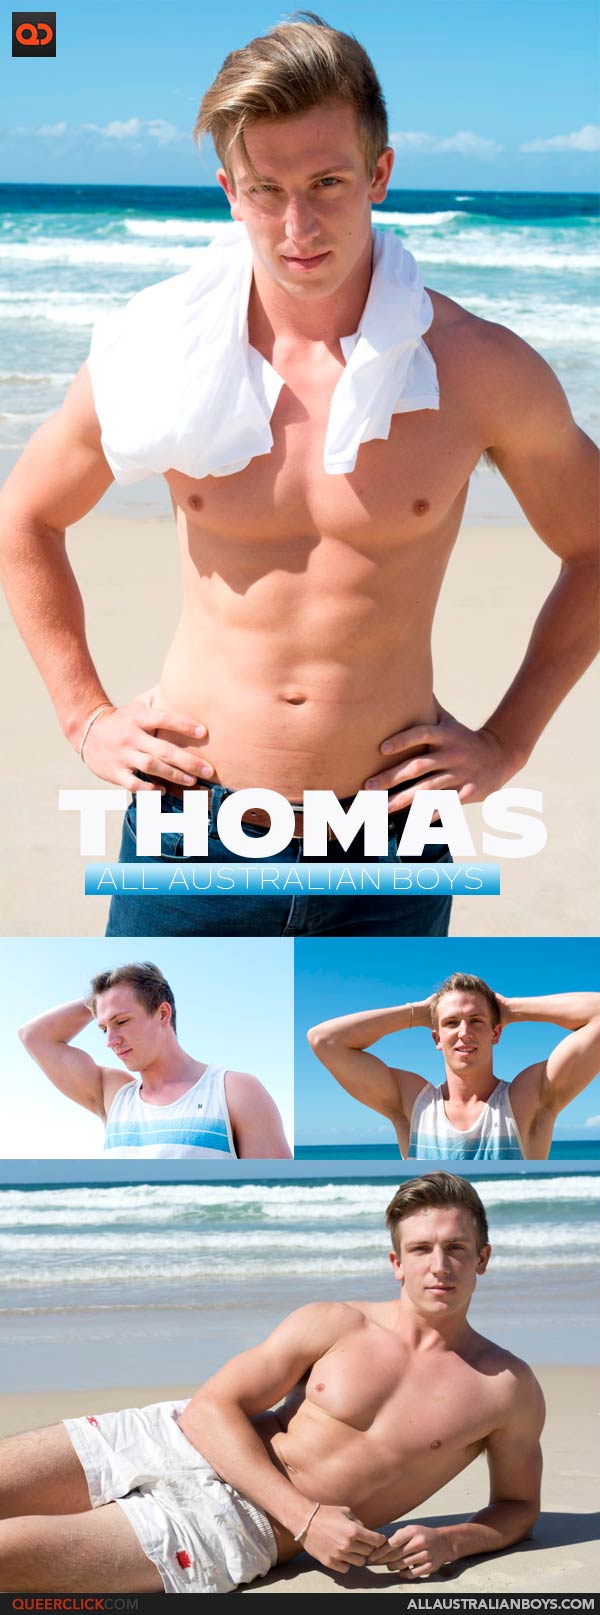 All Australian Boys: Thomas